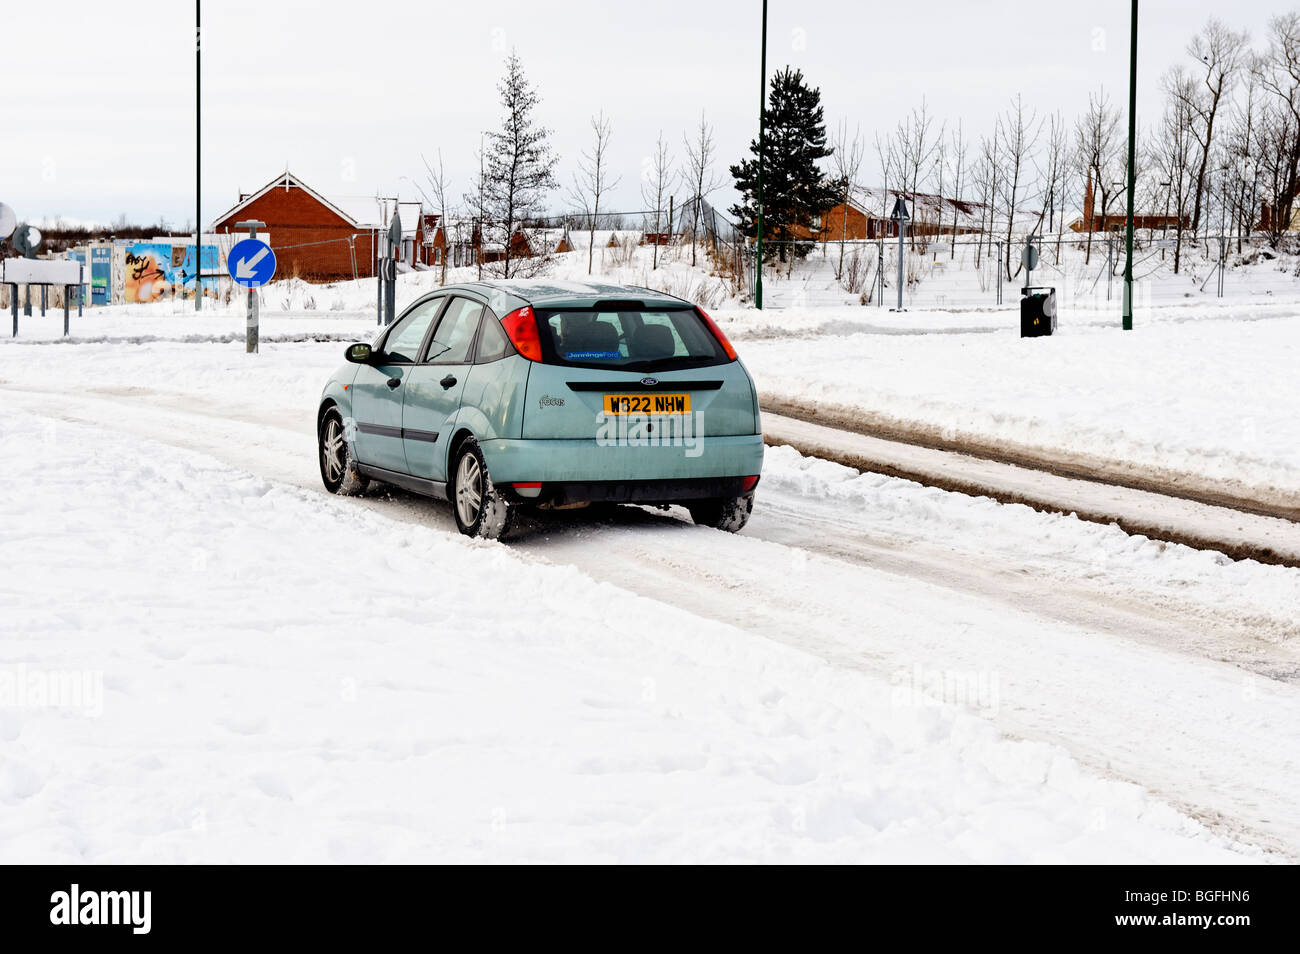 Inverno motoring car guida in presenza di neve su una strada urbana Foto Stock